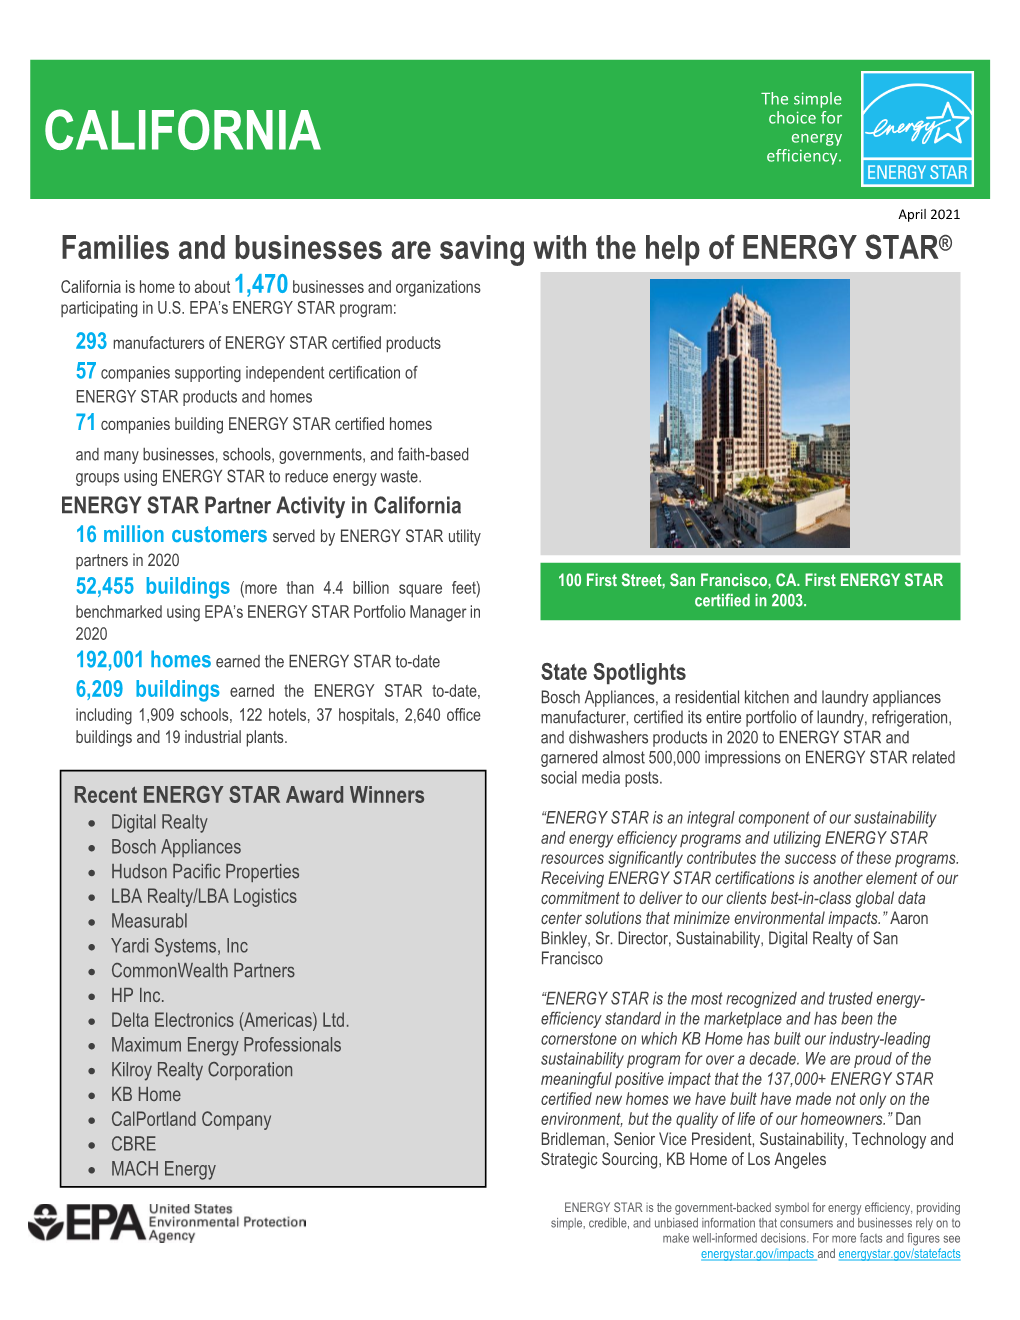 California ENERGY STAR Partners